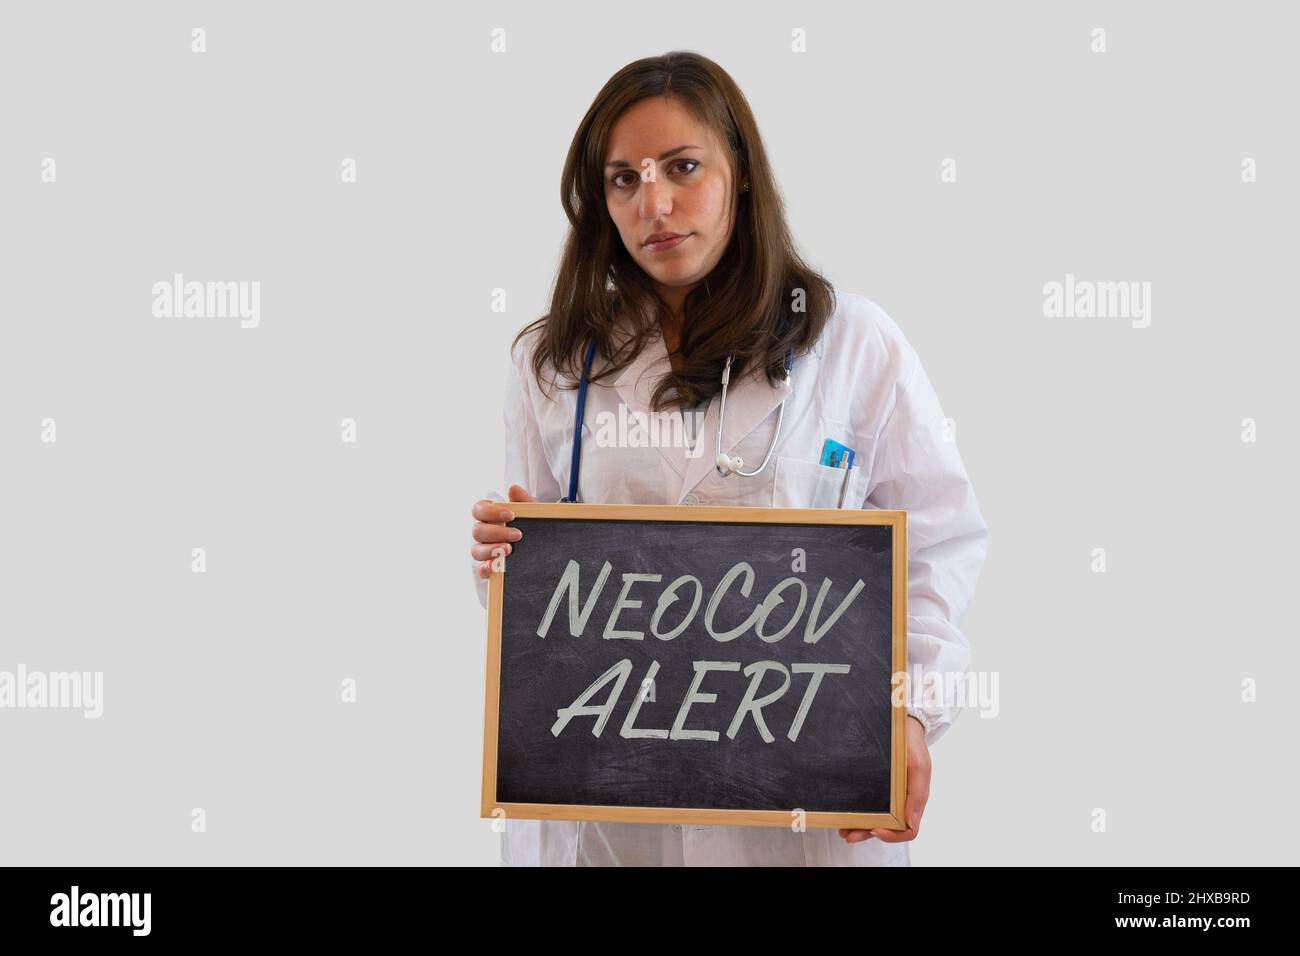 Serious female doctor holding blackboard with Neocov alert. New kind of coronavirus. Isolated on grey background. Stock Photo